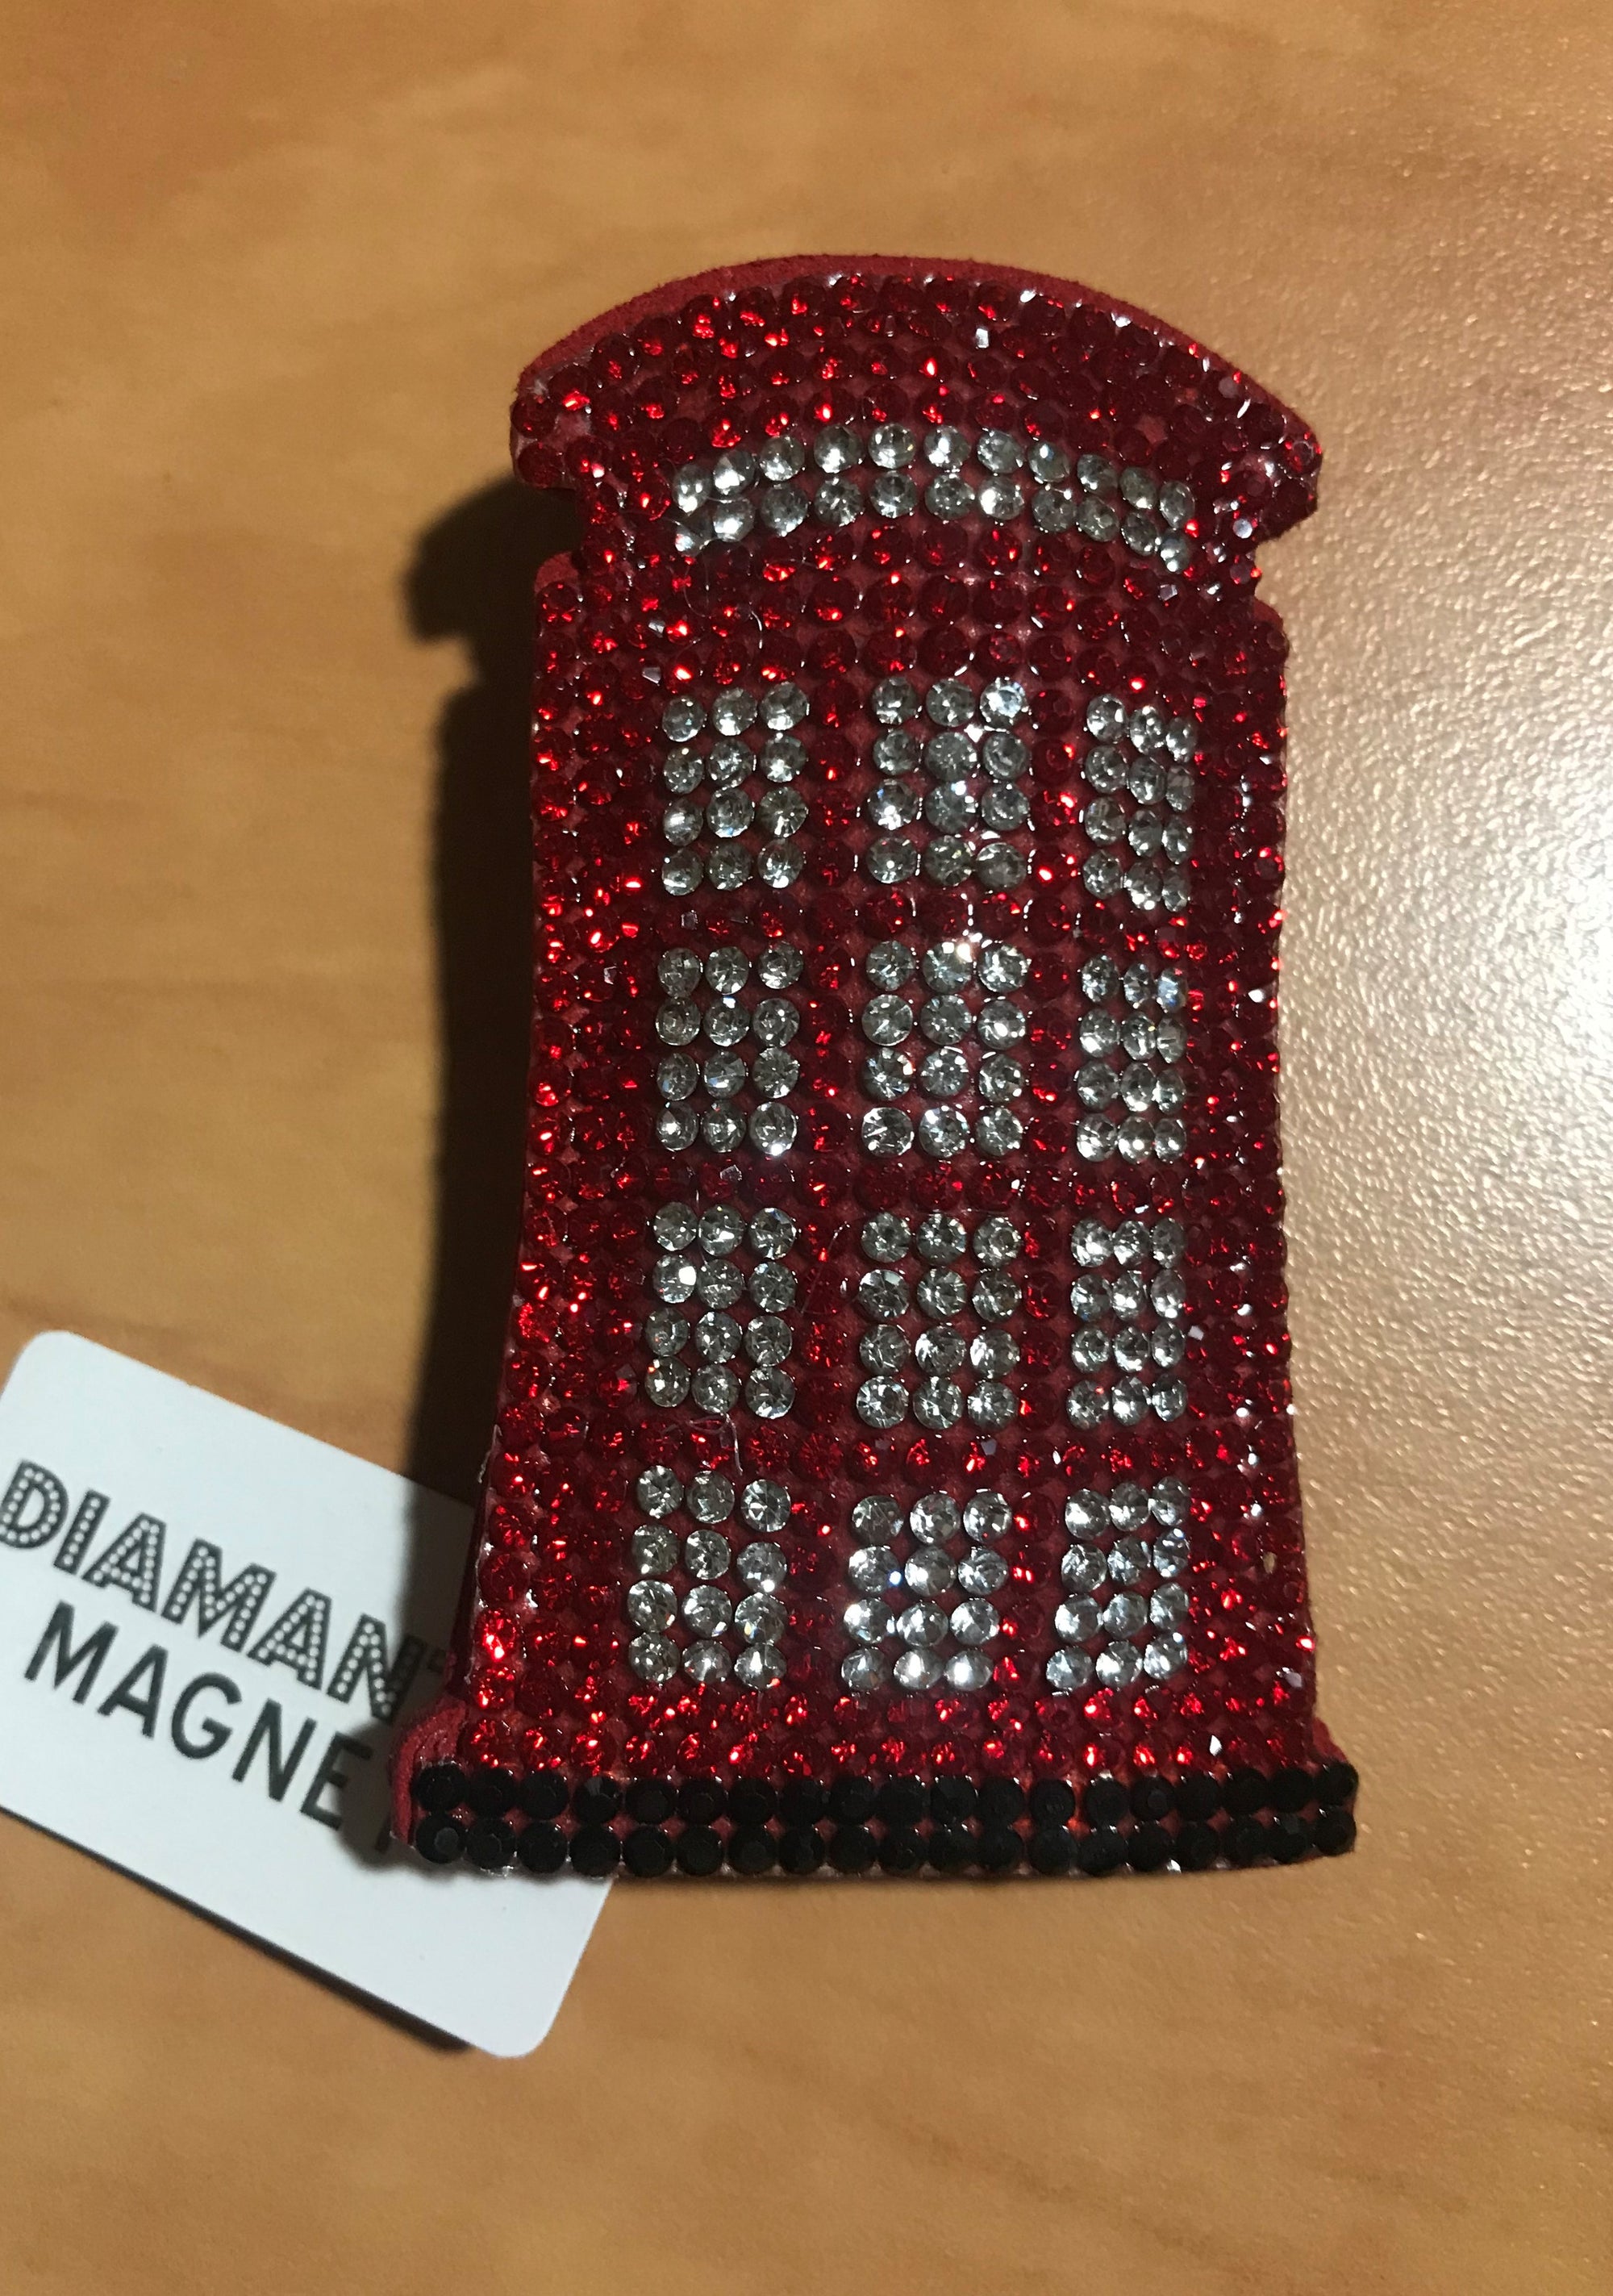 Telephone Box Diamante Magnet